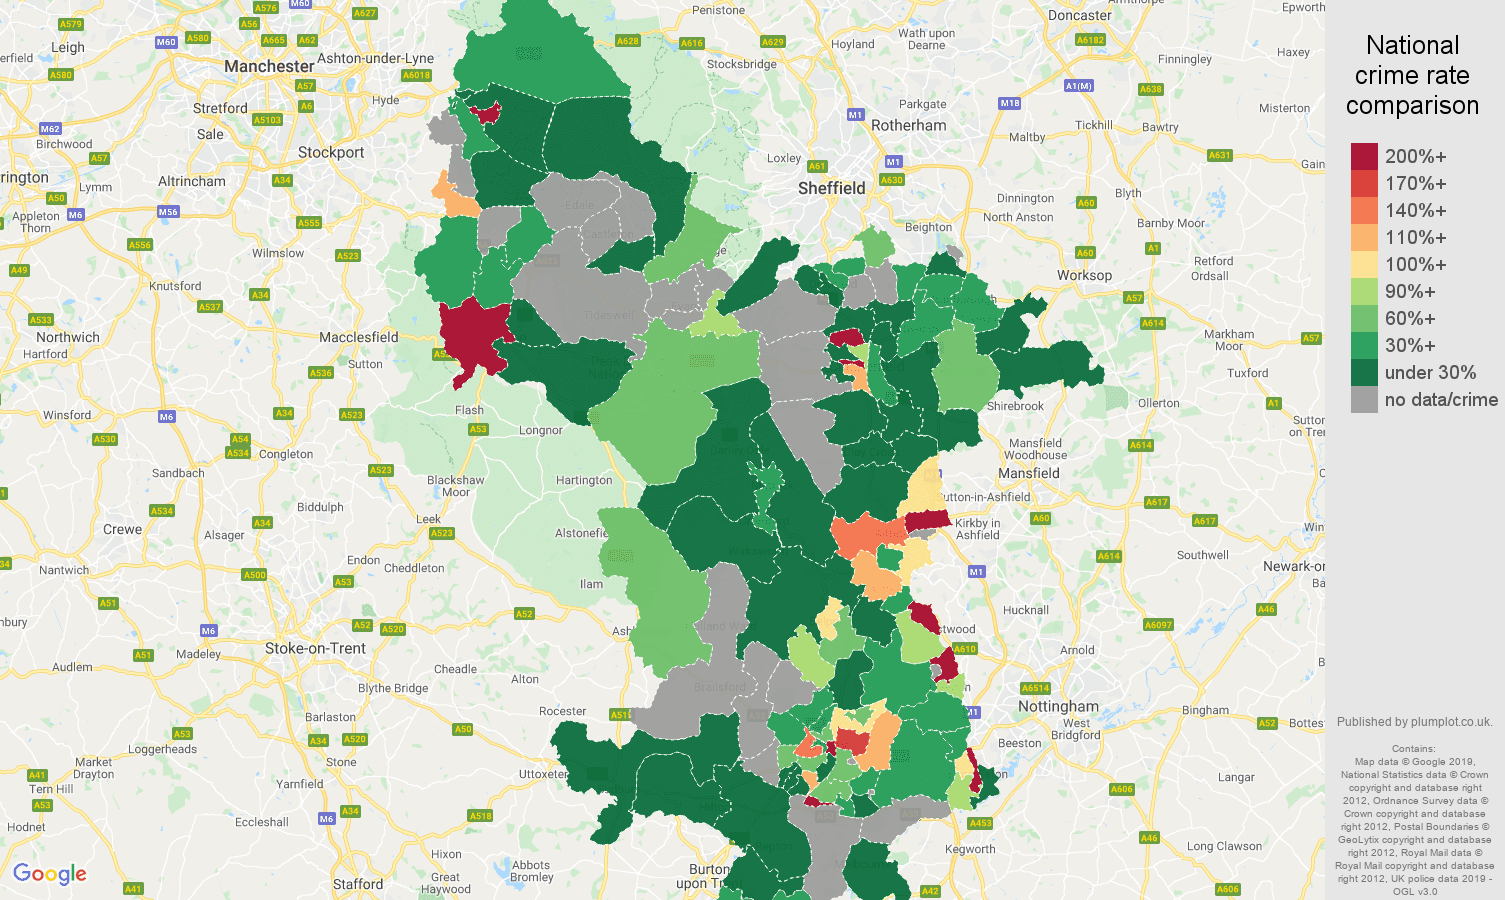 Derbyshire shoplifting crime rate comparison map